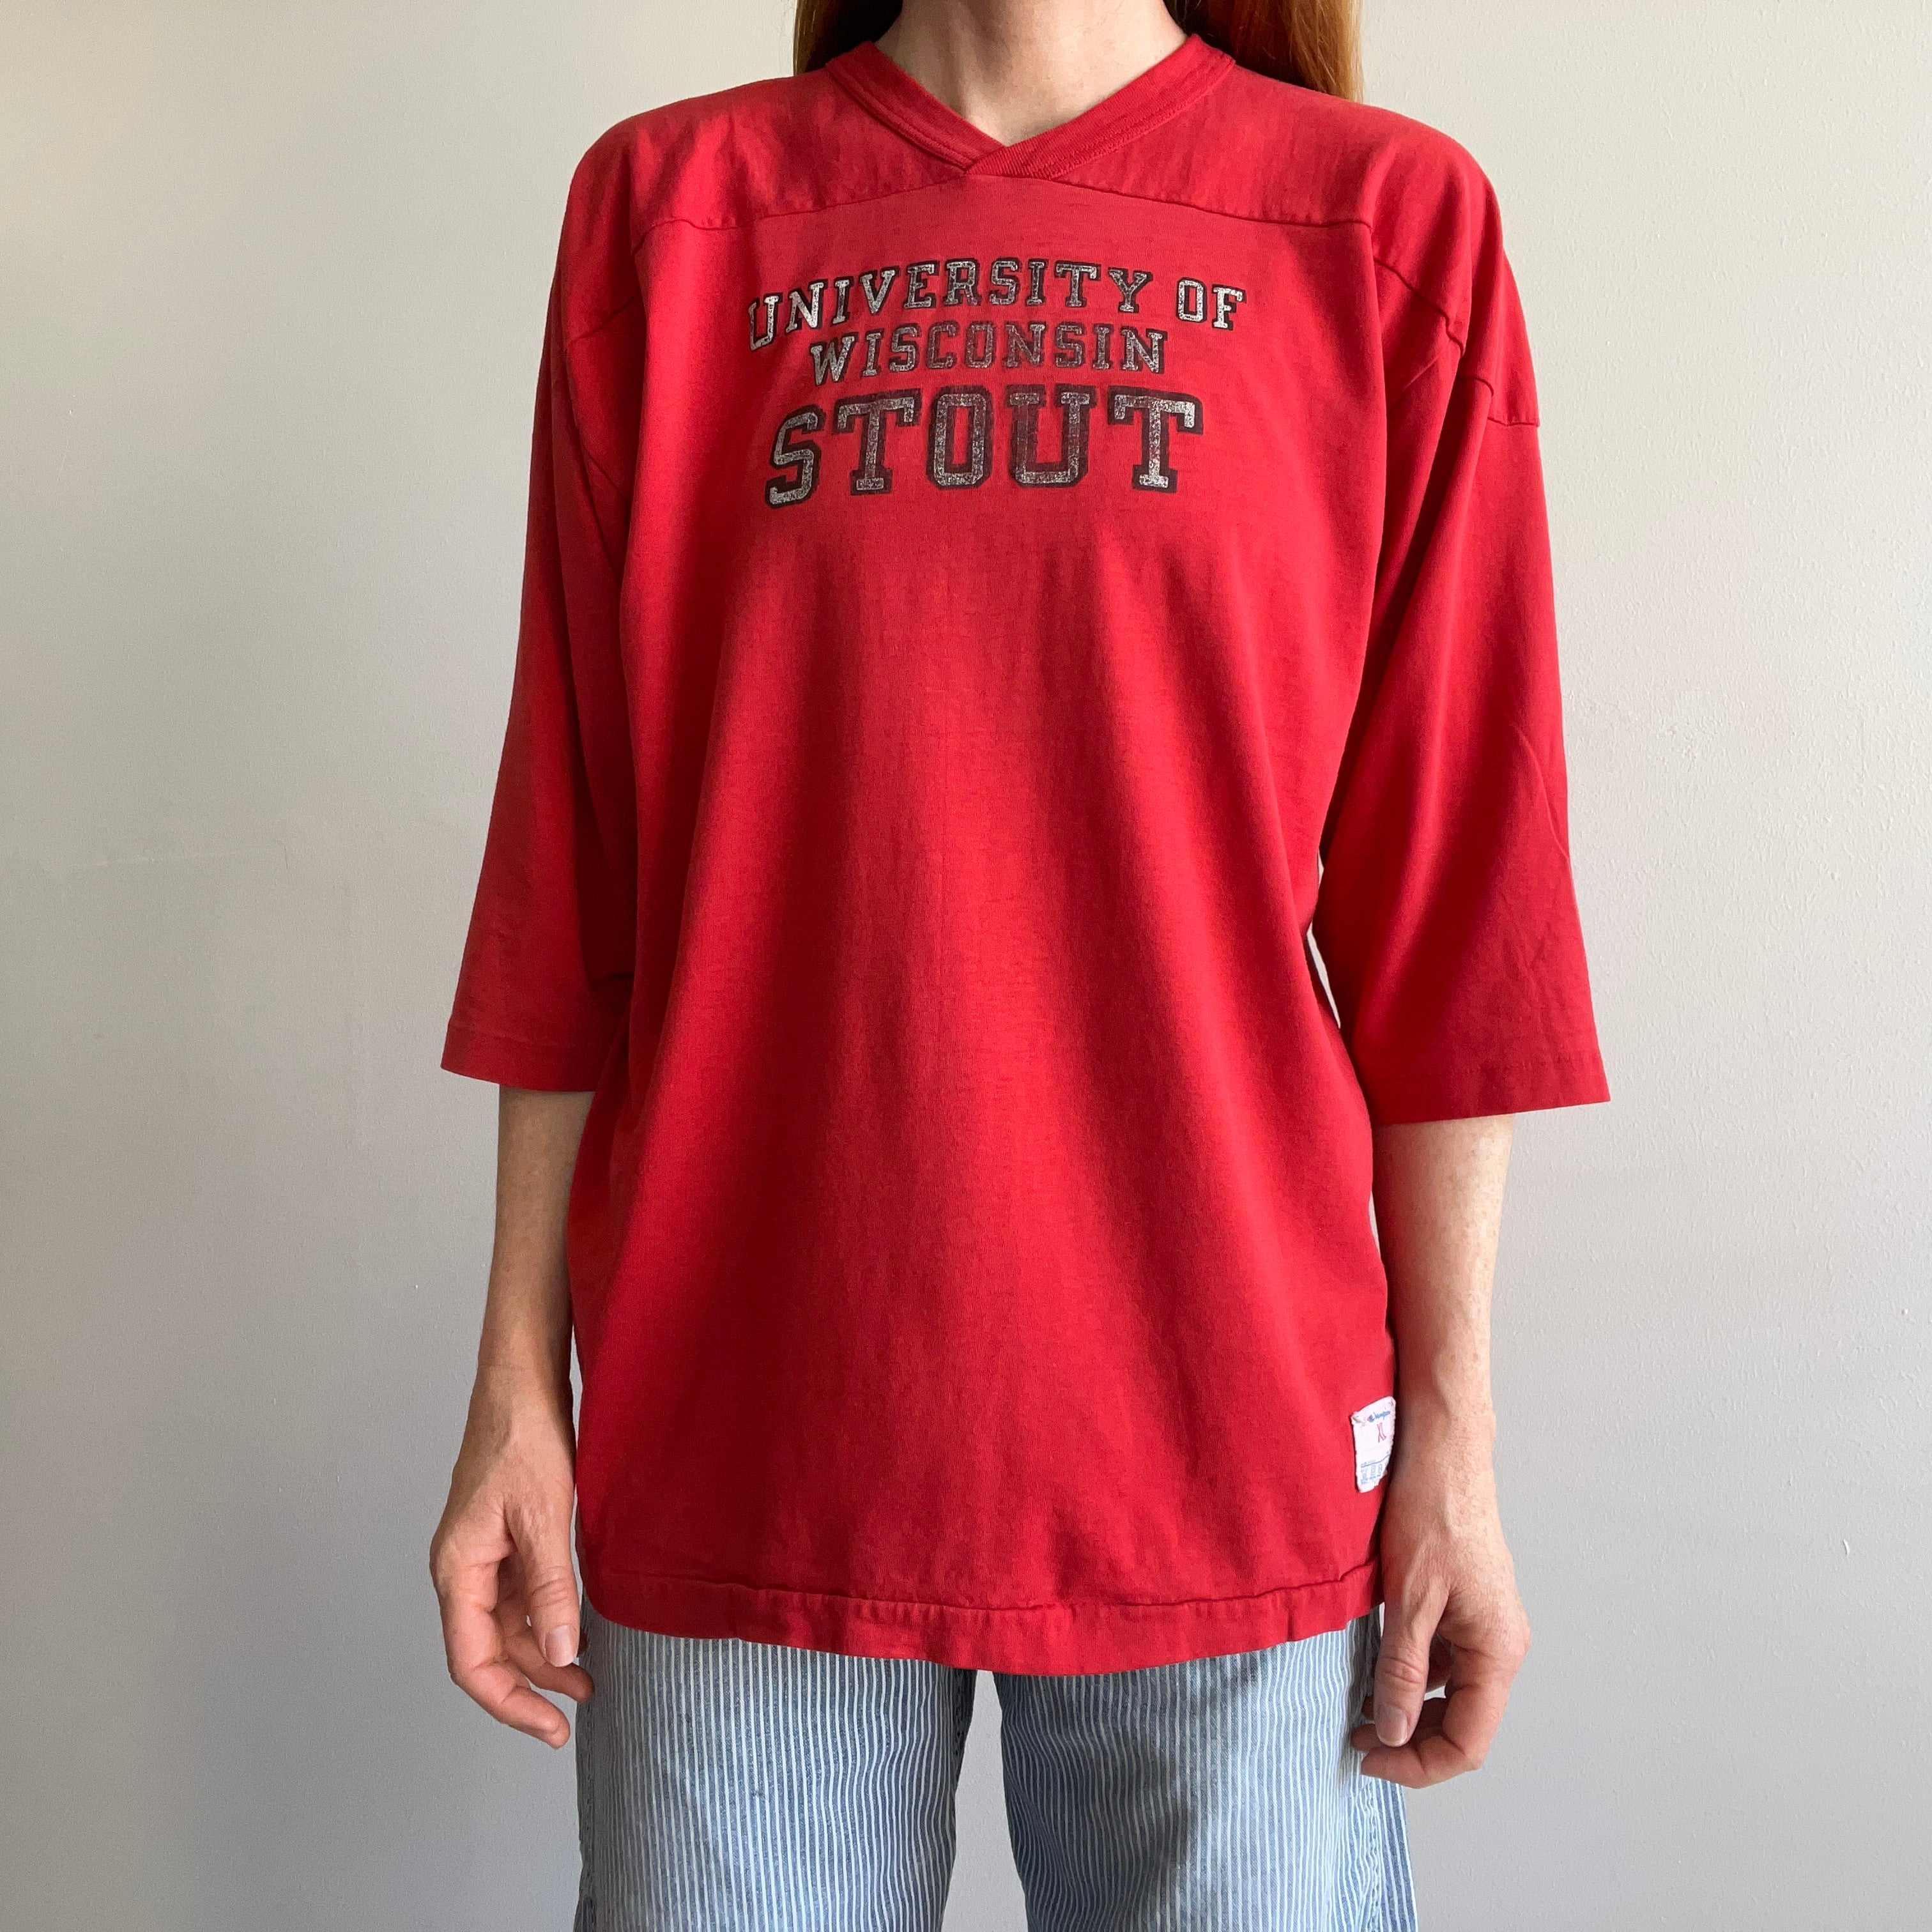 1970s Champion Brand University of Wisconsin Stout Super Soft Football Shirt